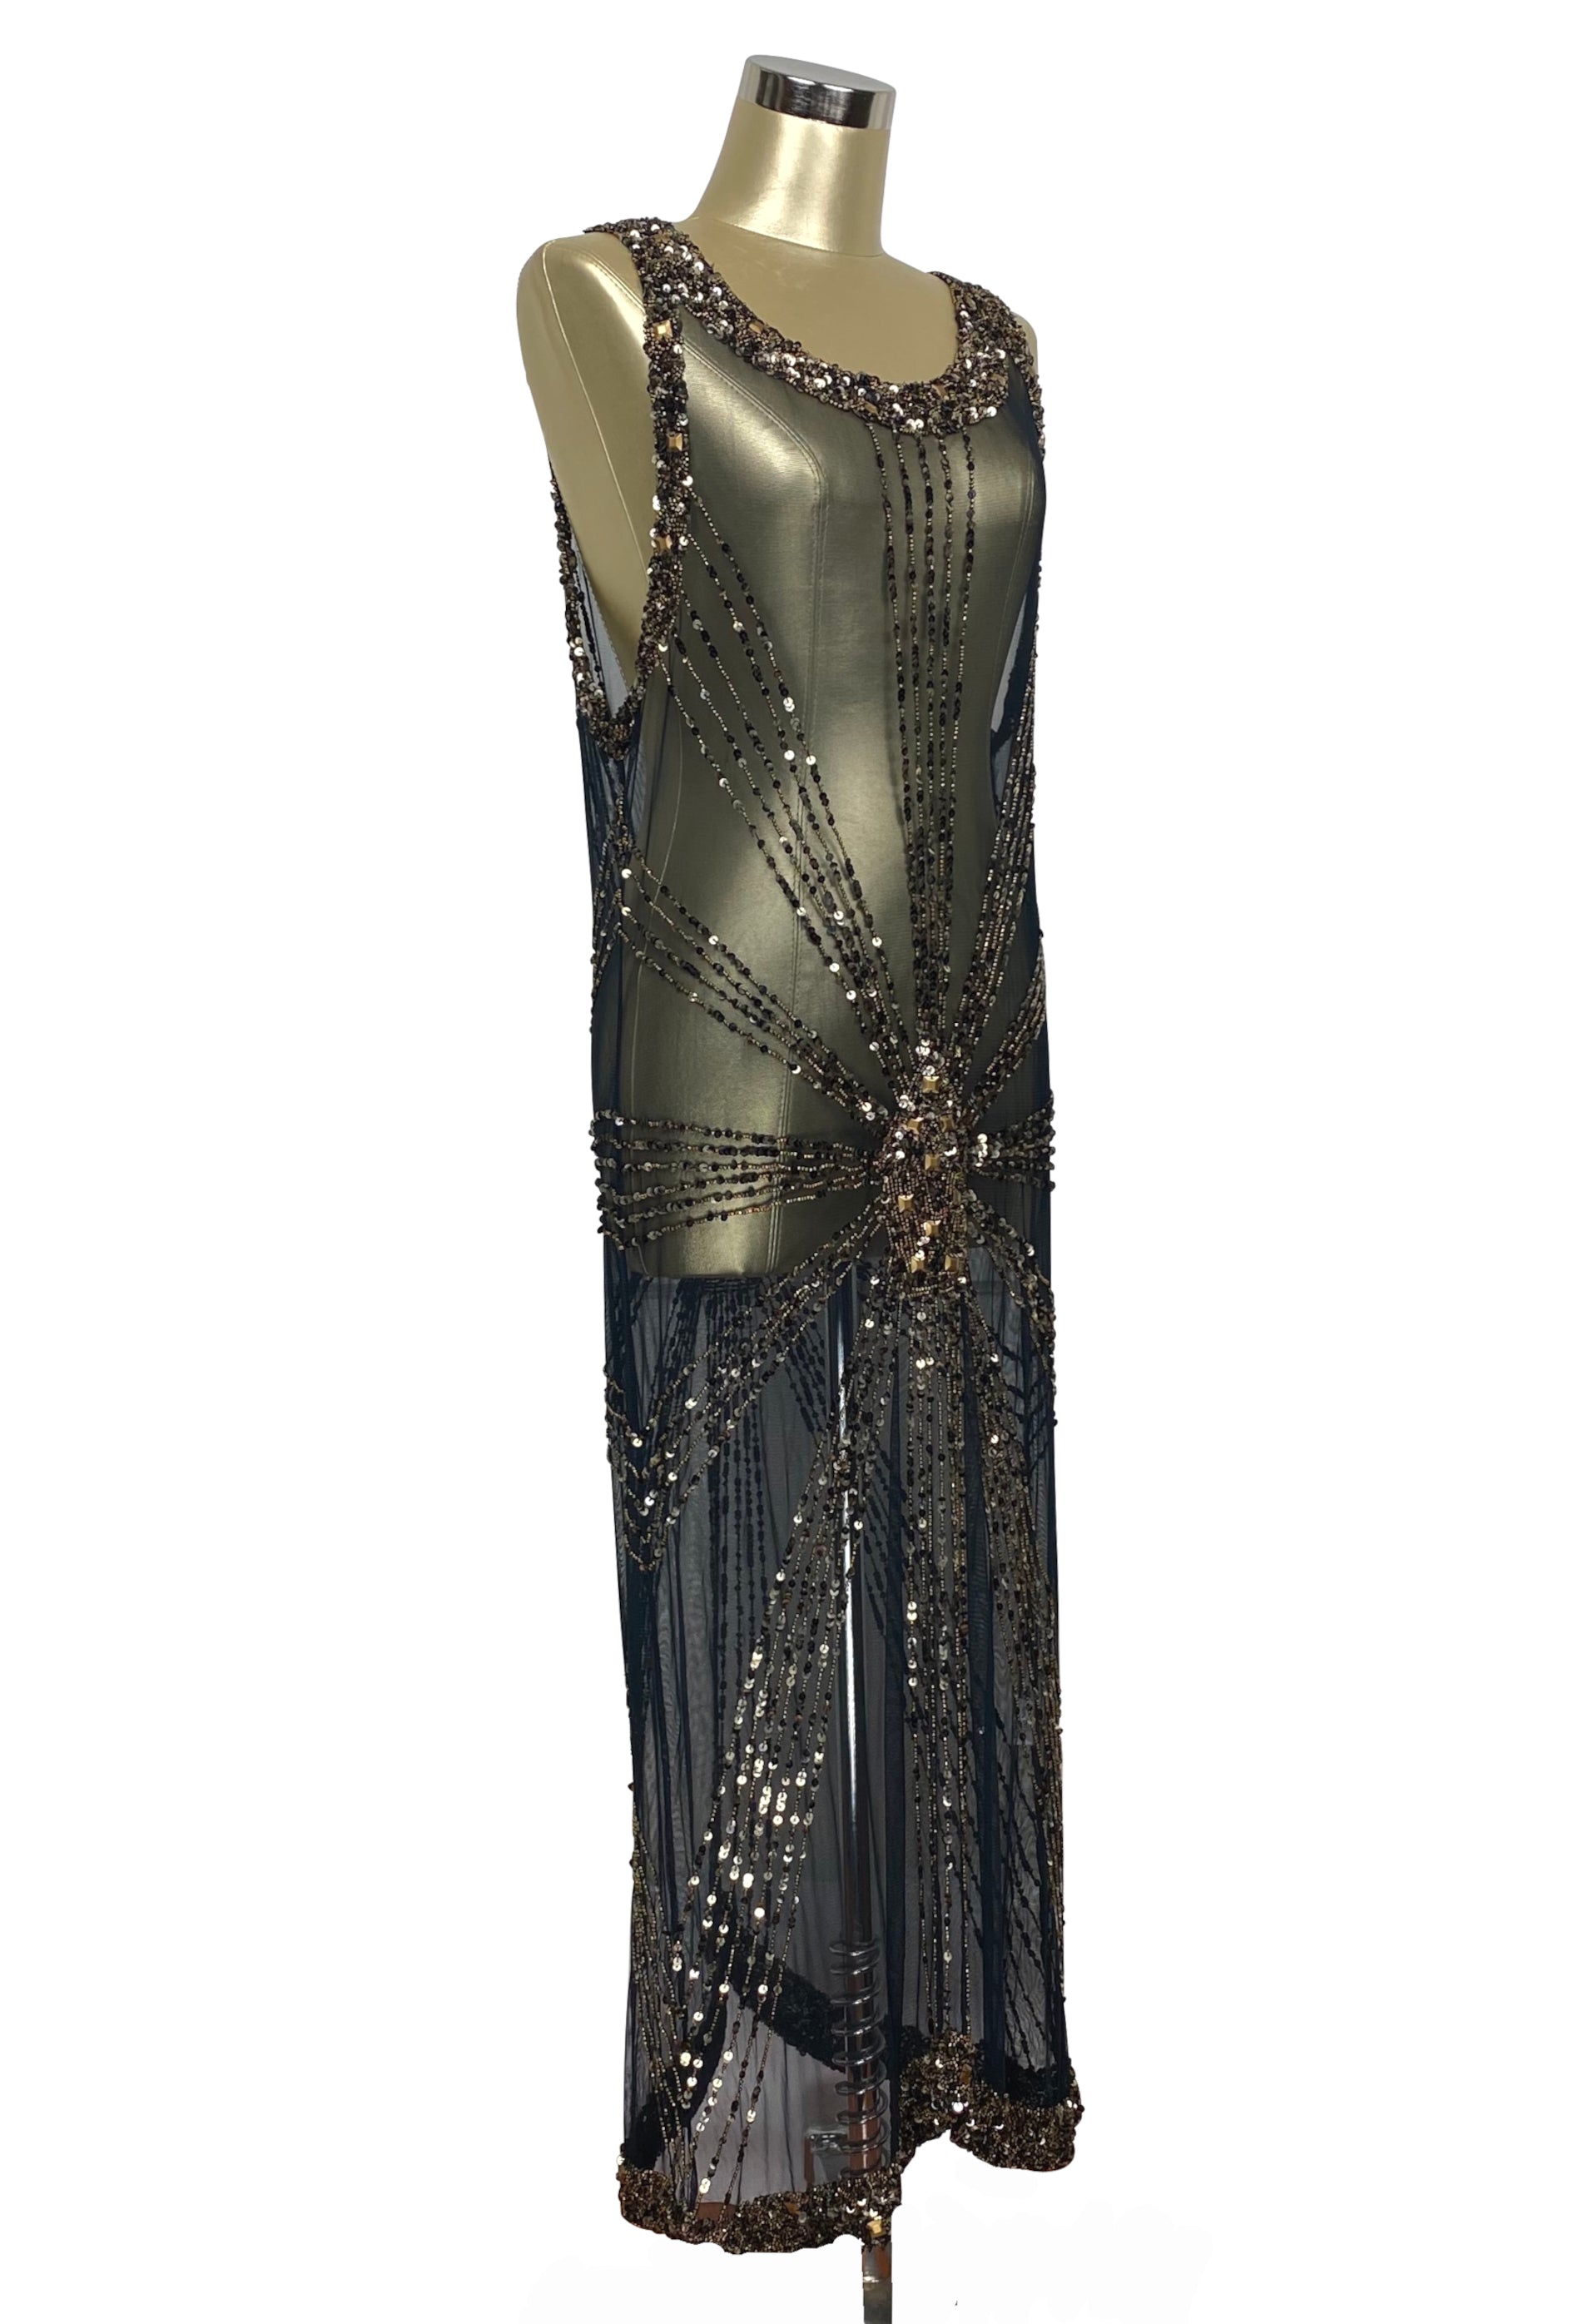 1930's Art Deco Panel Liquid Full-Length Overlay Gown - The Sunray - B